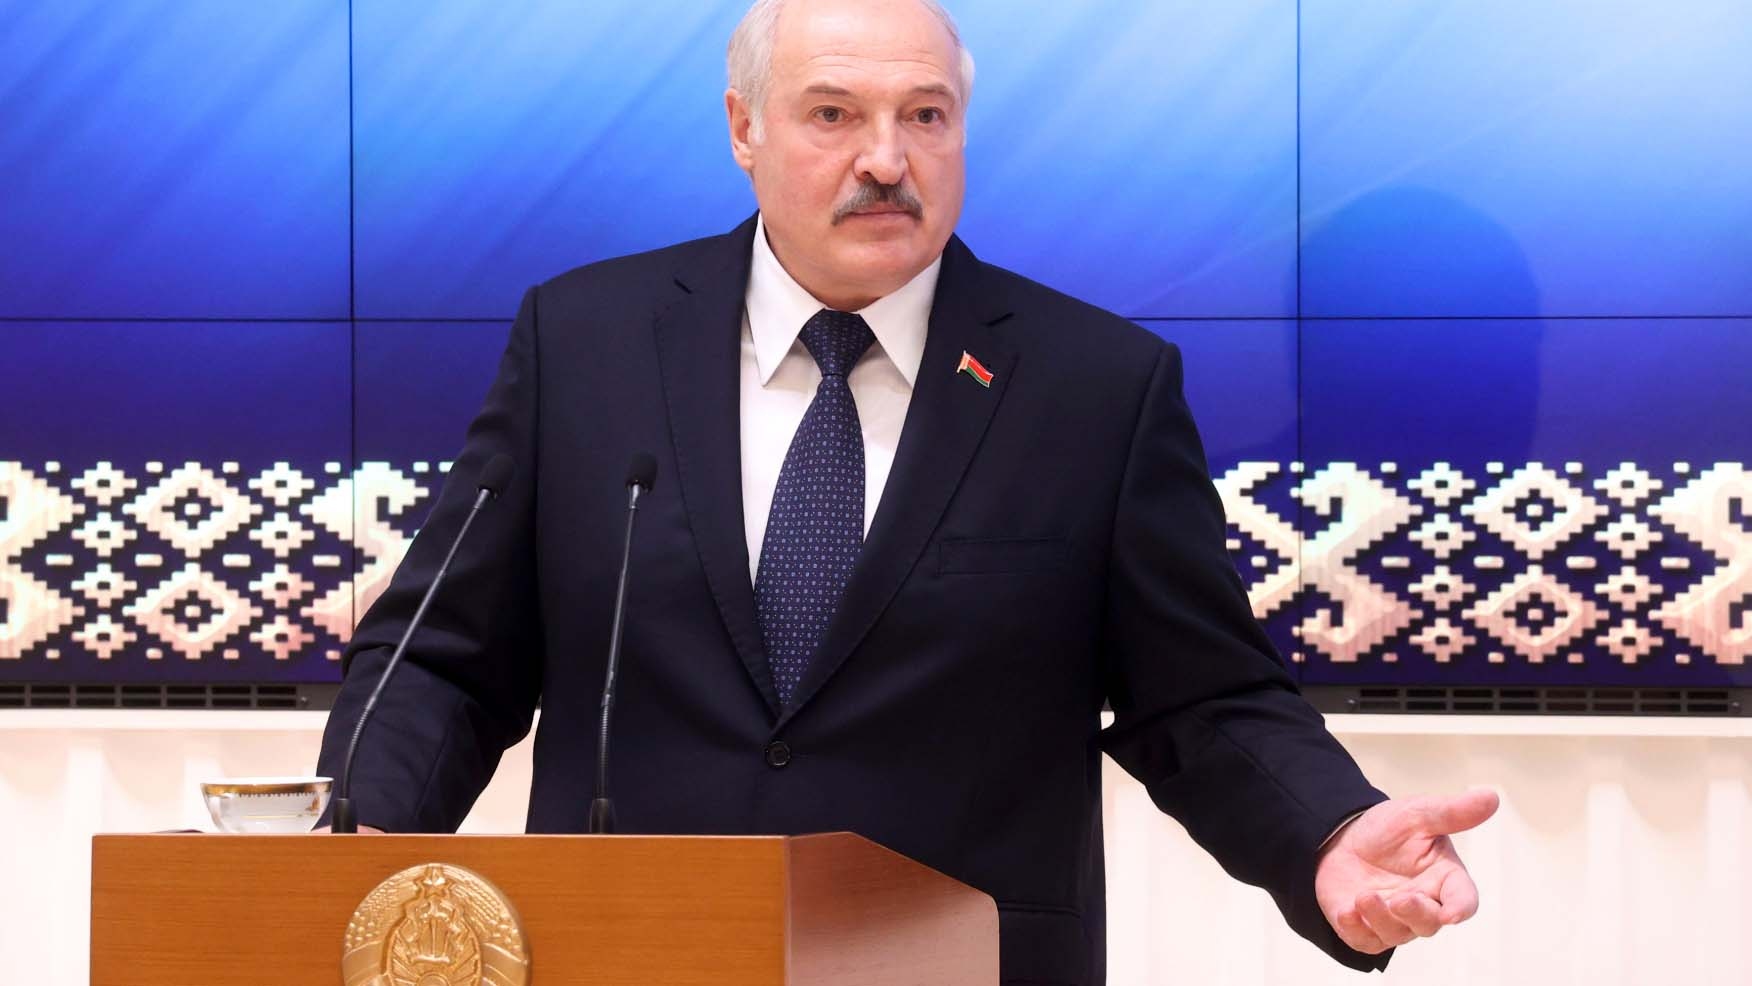 Belarus President Alexander Lukashenko speaks during a meeting with officials in Minsk, Belarus, Friday, July 23, 2021. (Nikolay Petrov/BelTA Pool Photo via AP)